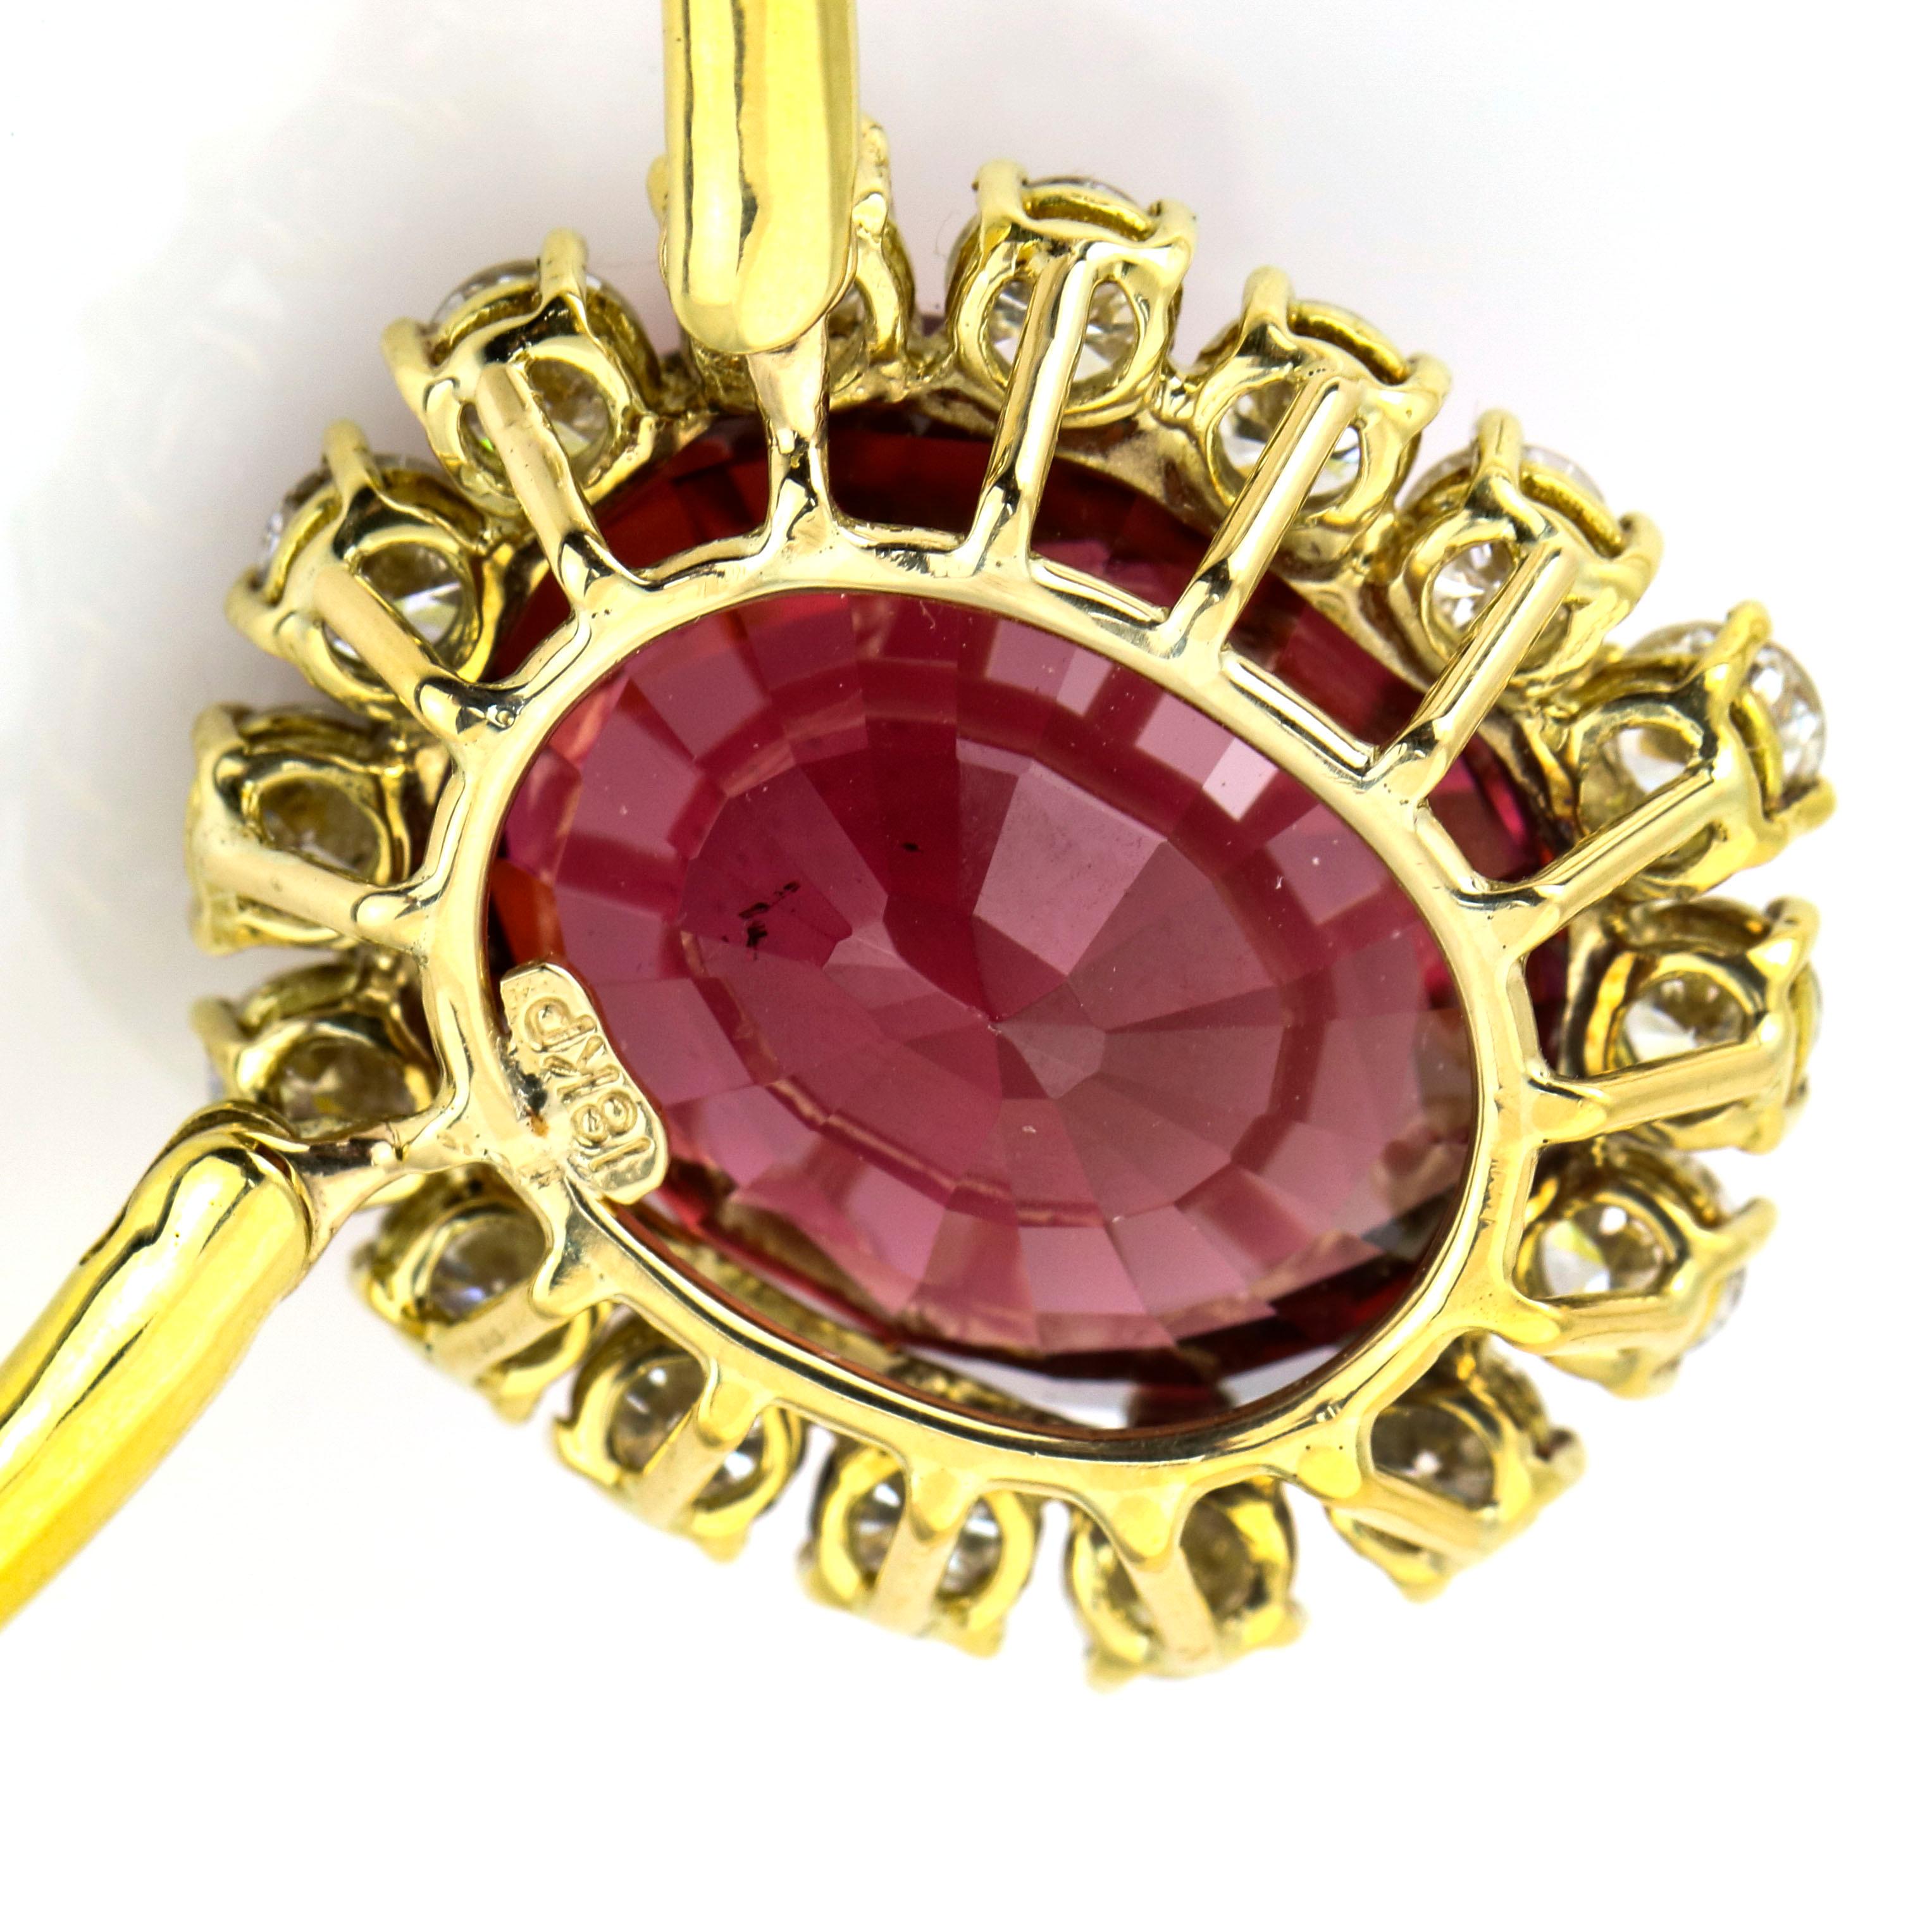 39.34 Carat 18 Karat Yellow Gold Rubellite Tourmaline Diamond Pendant Necklace For Sale 2